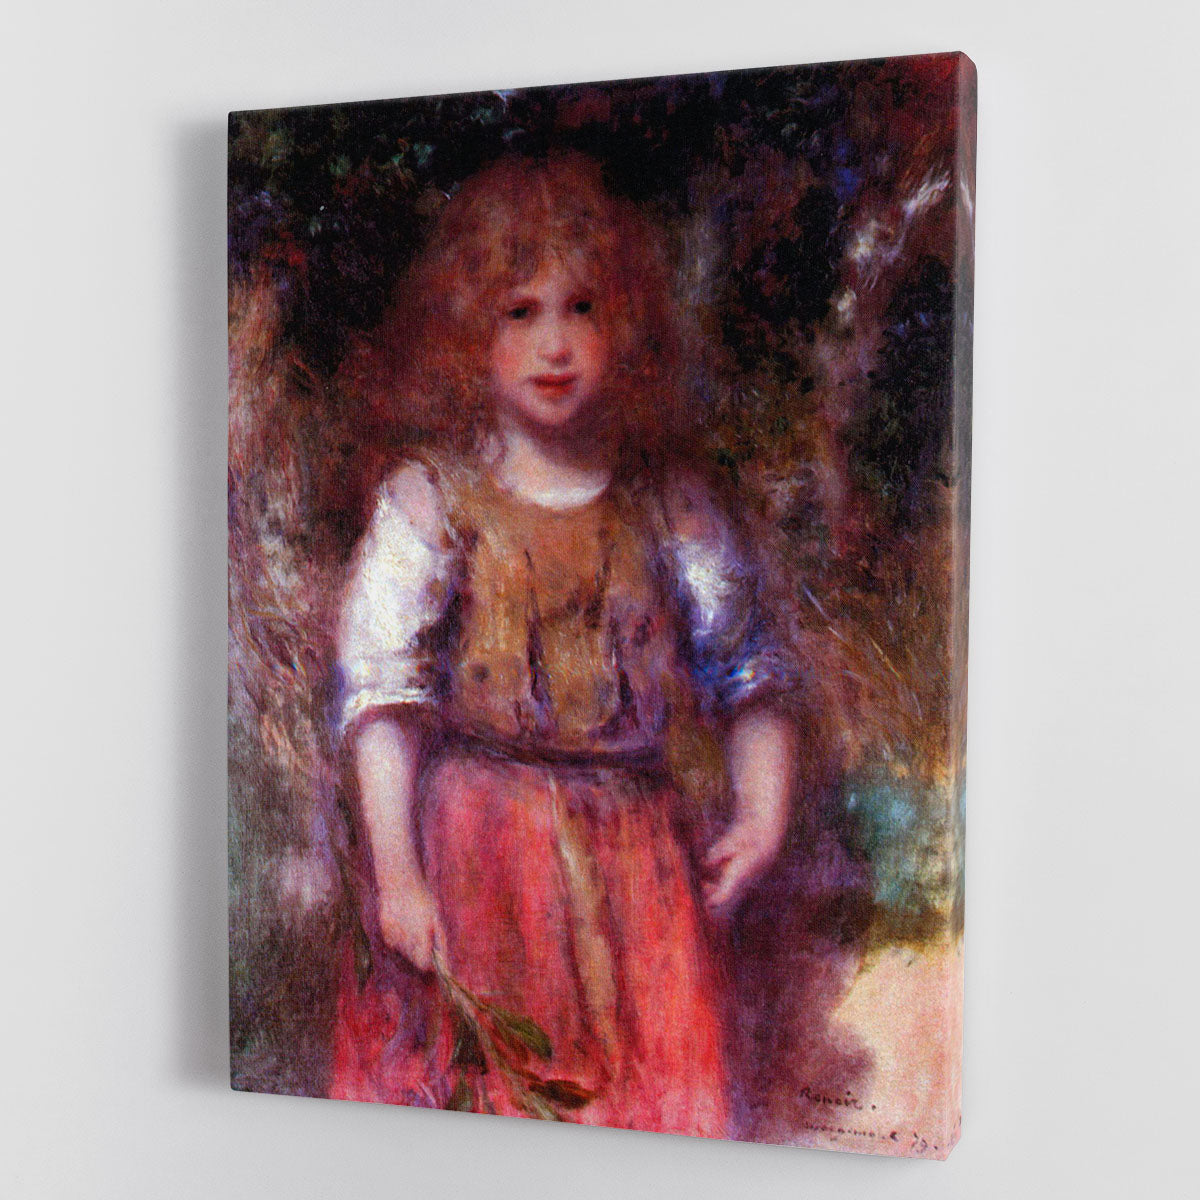 Gypsy girl by Renoir Canvas Print or Poster - Canvas Art Rocks - 1